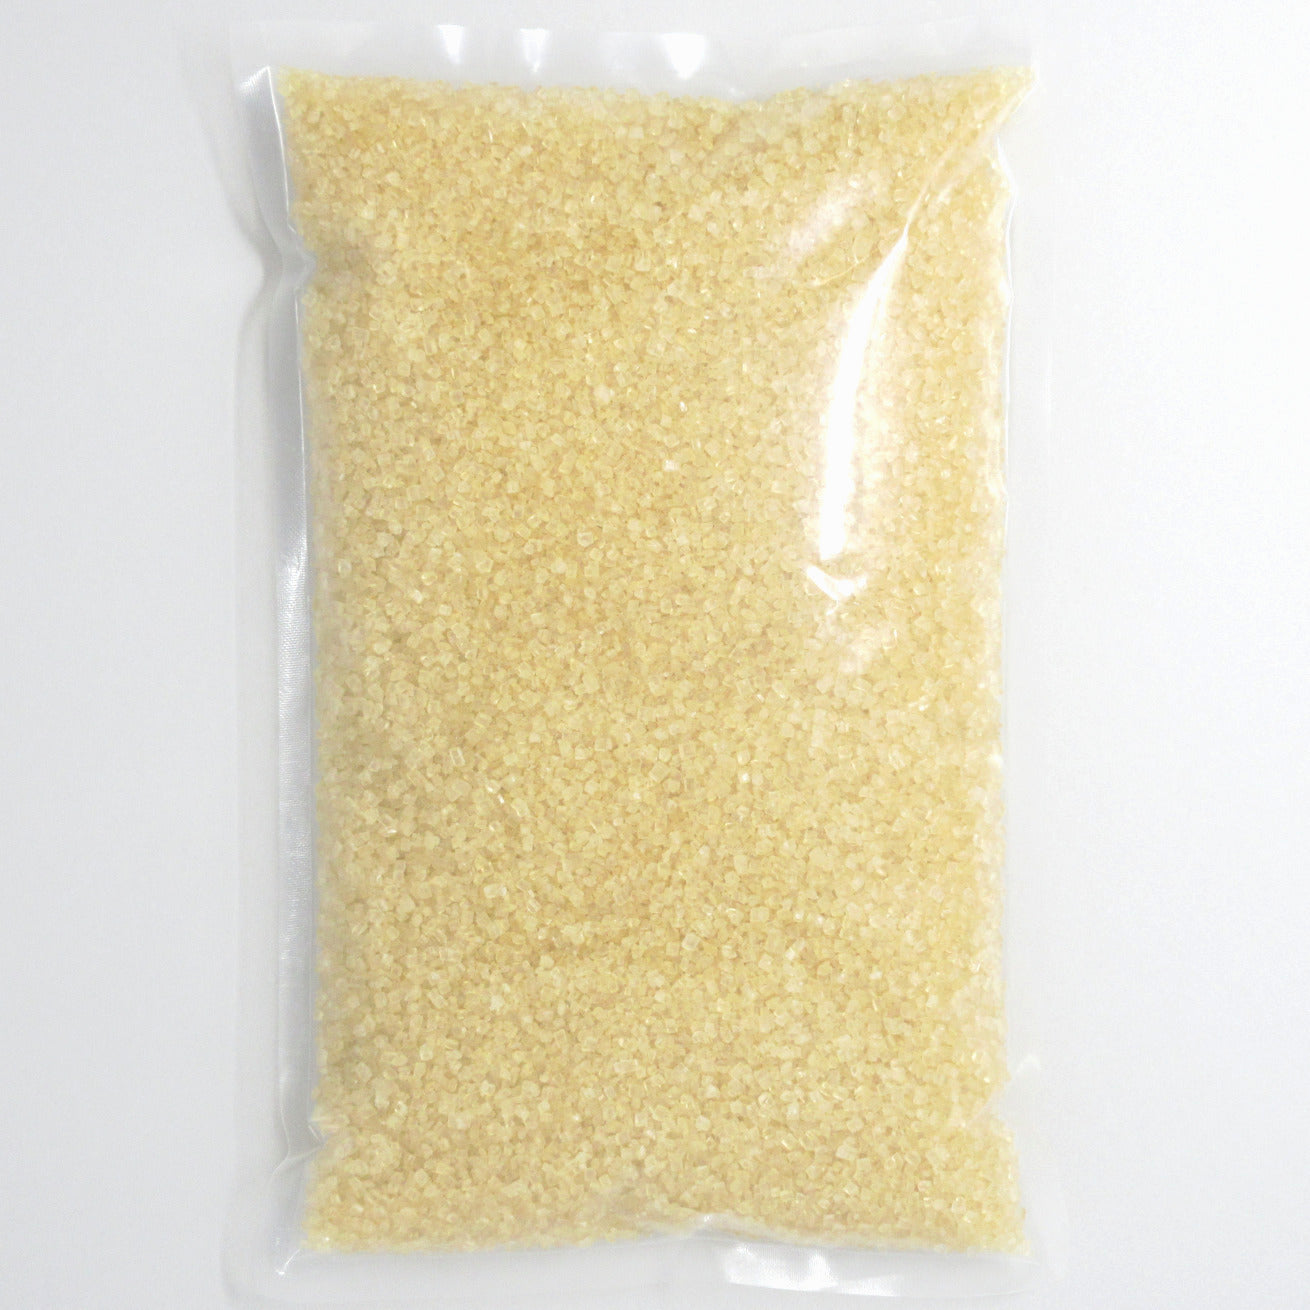 Flour Barrel product image - Turbinado Sugar